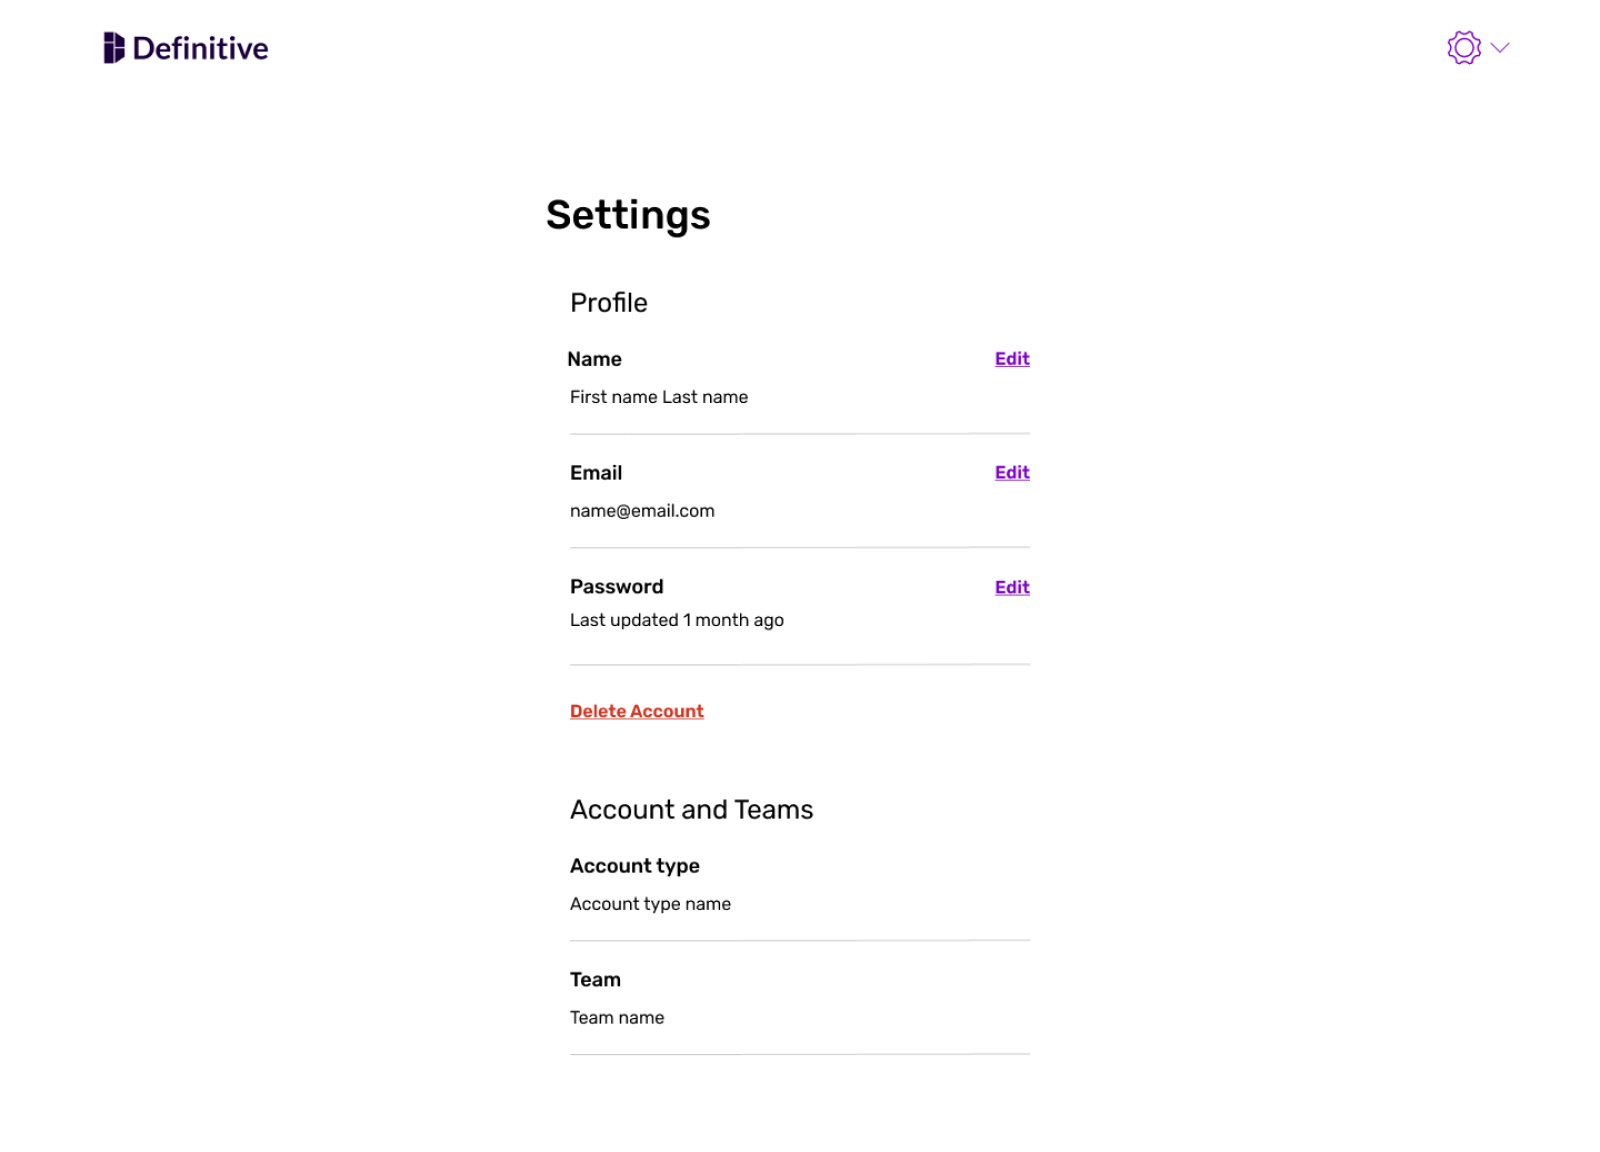 Definitive settings UI